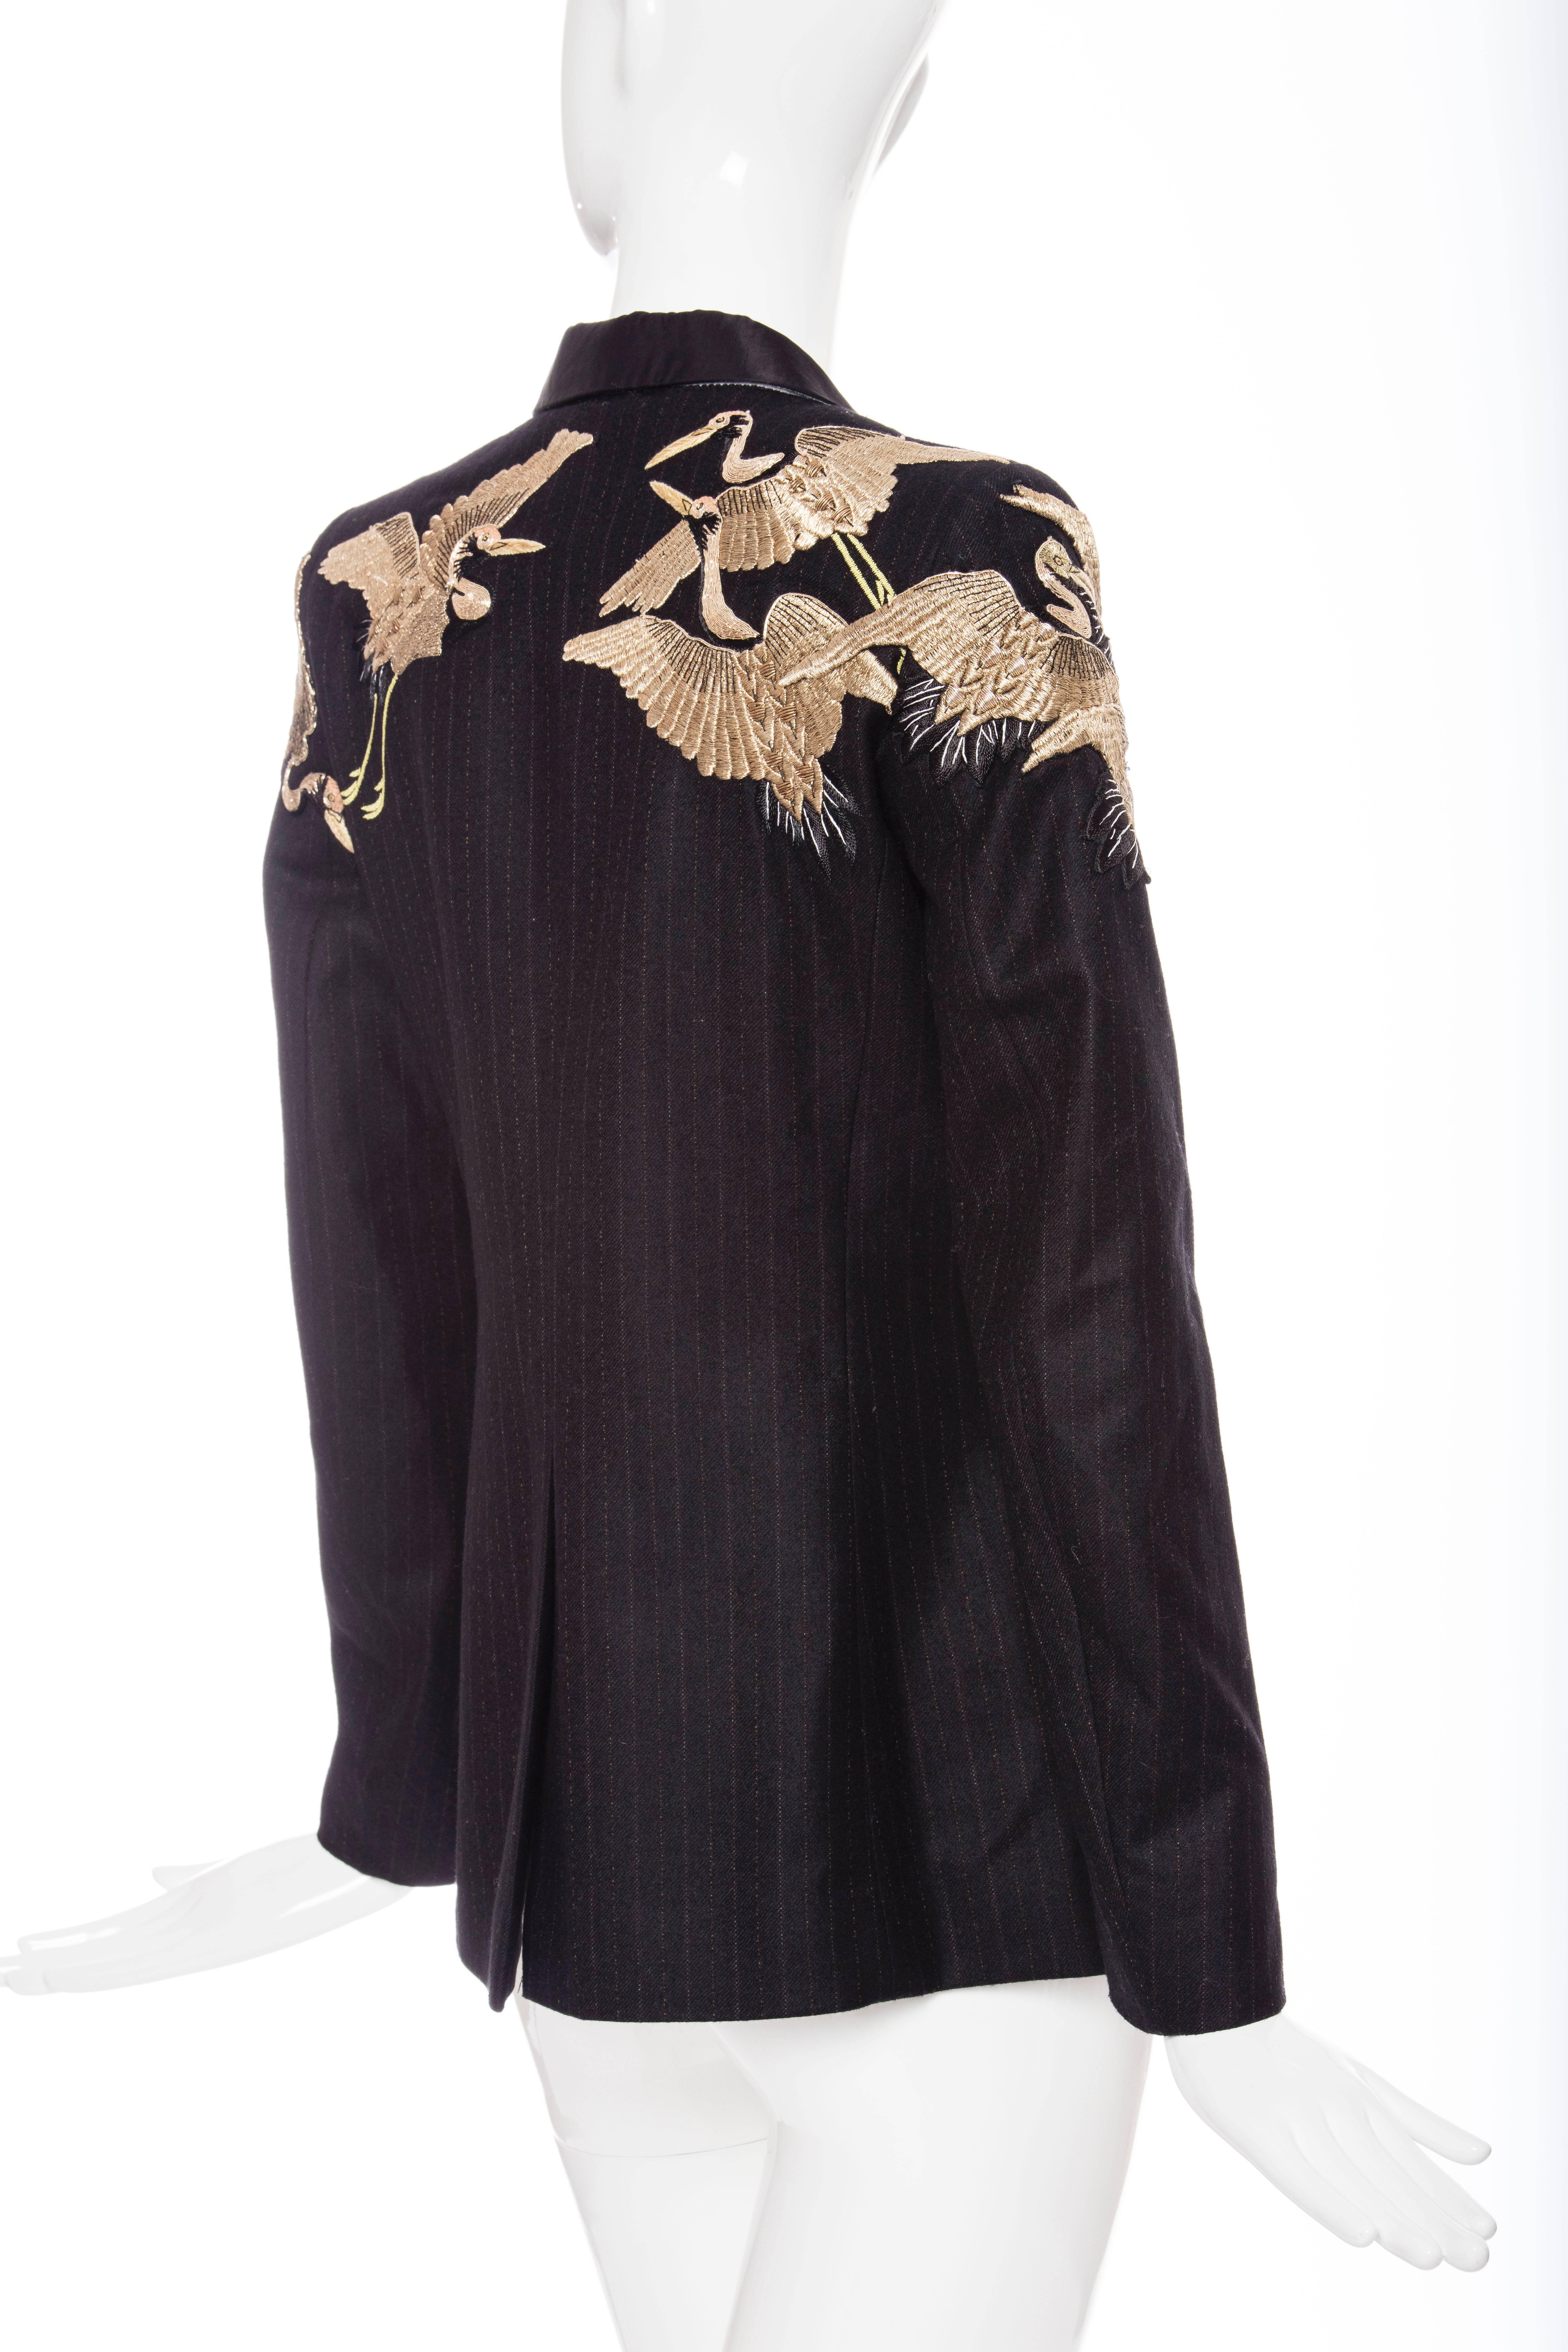 Dries Van Noten Wool Embroidered Blazer, Fall 2012 3